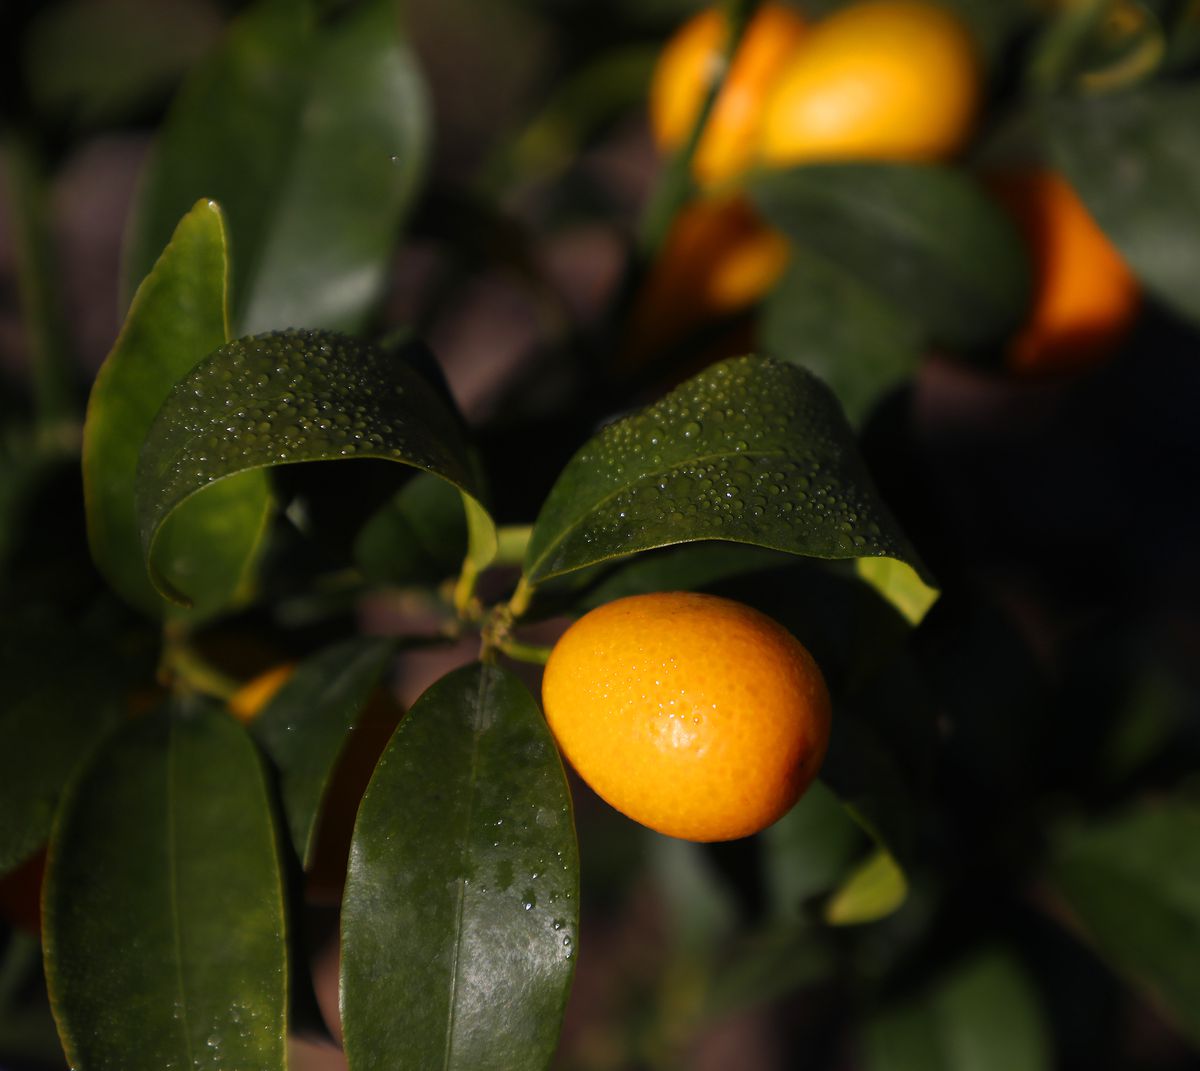 A kumquat grows on the branch.